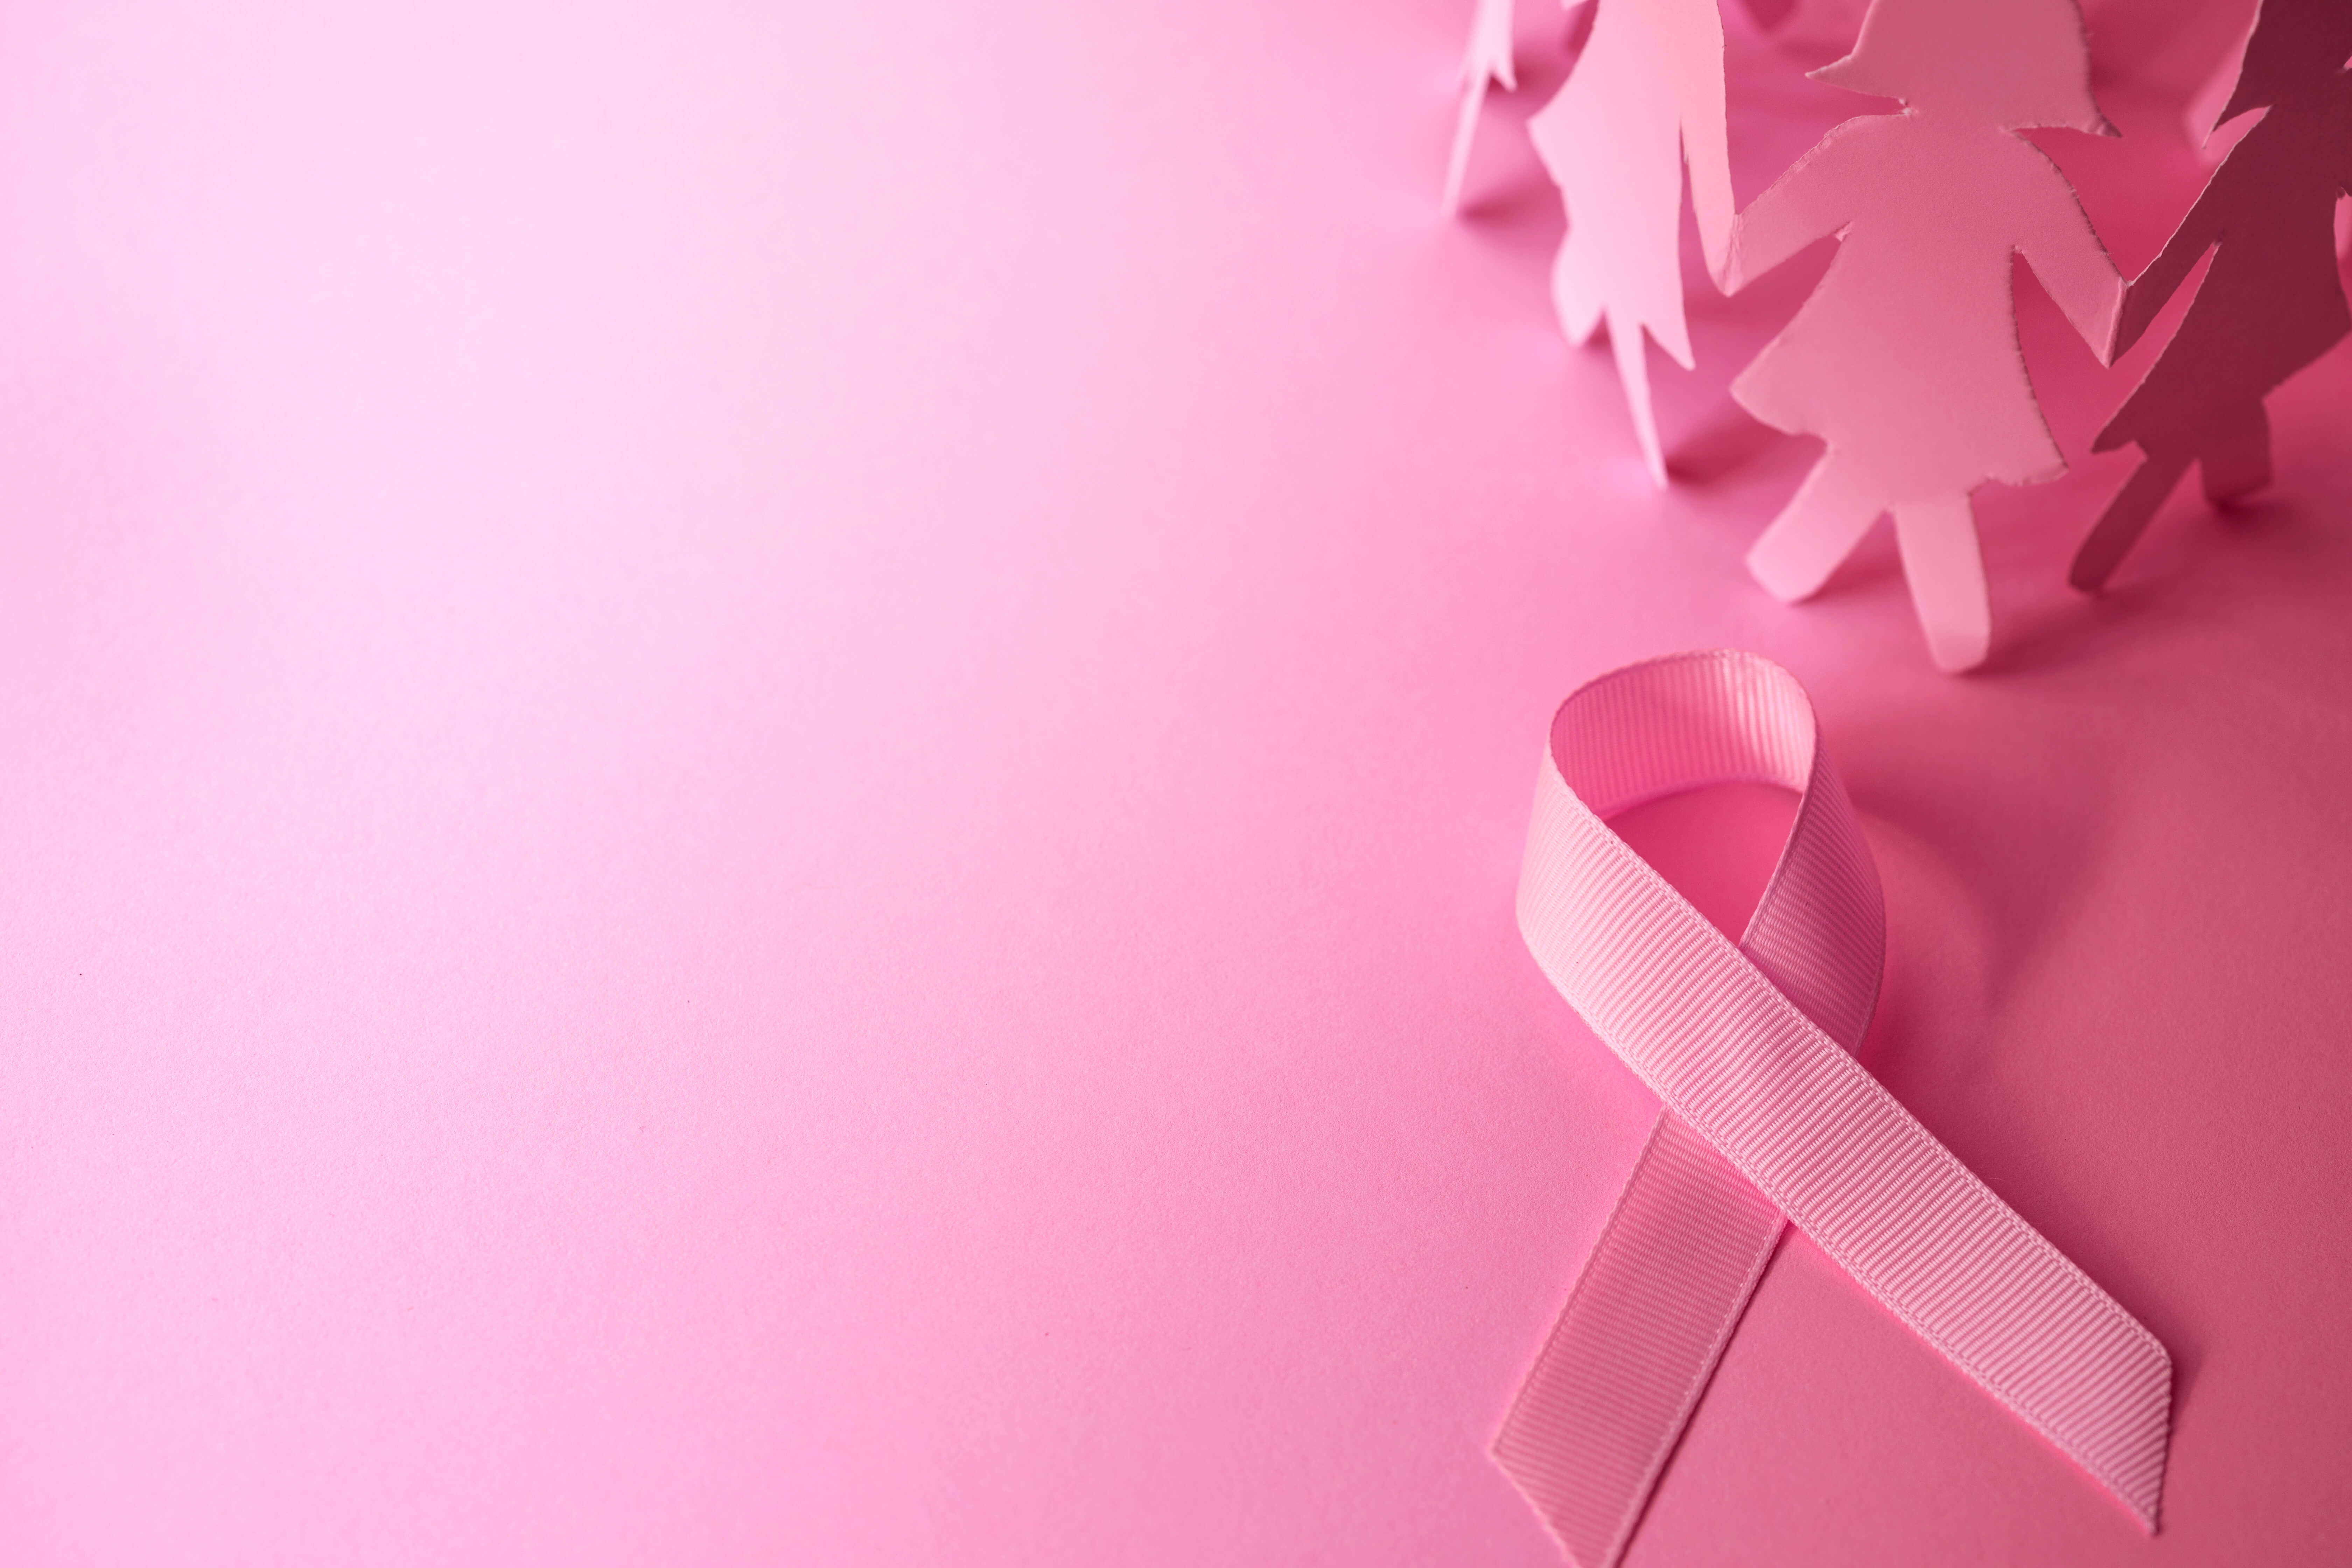 PINK OCTOBER - Breast Cancer Awareness Month